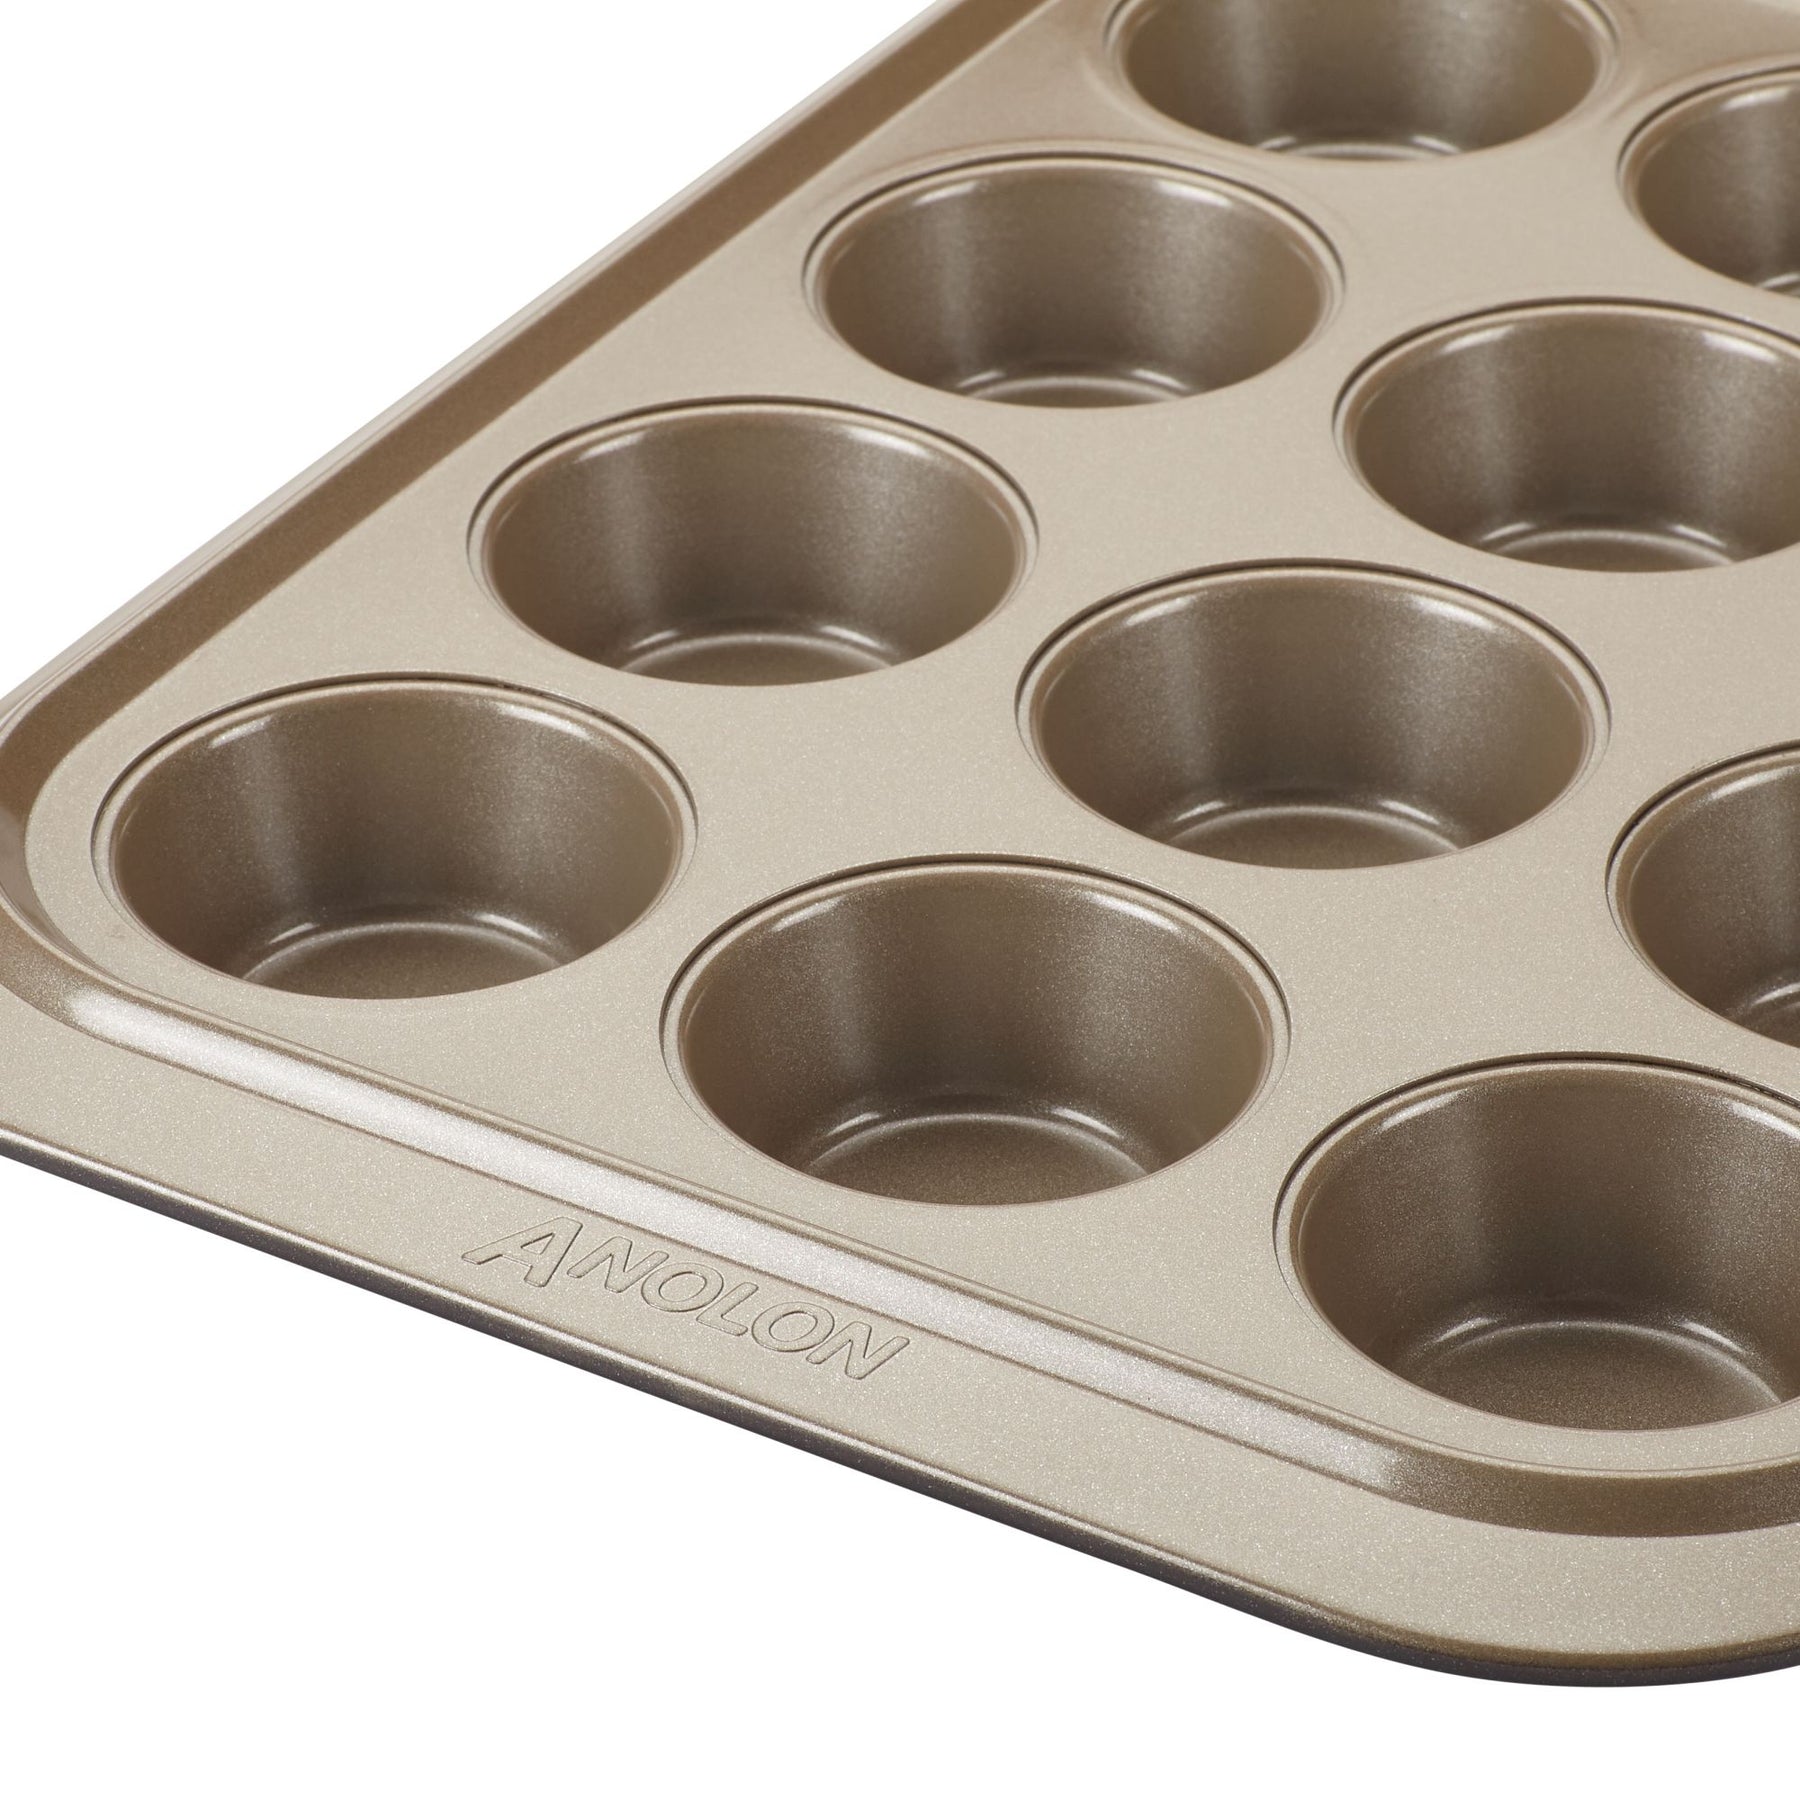 Muffin Pan – Anolon